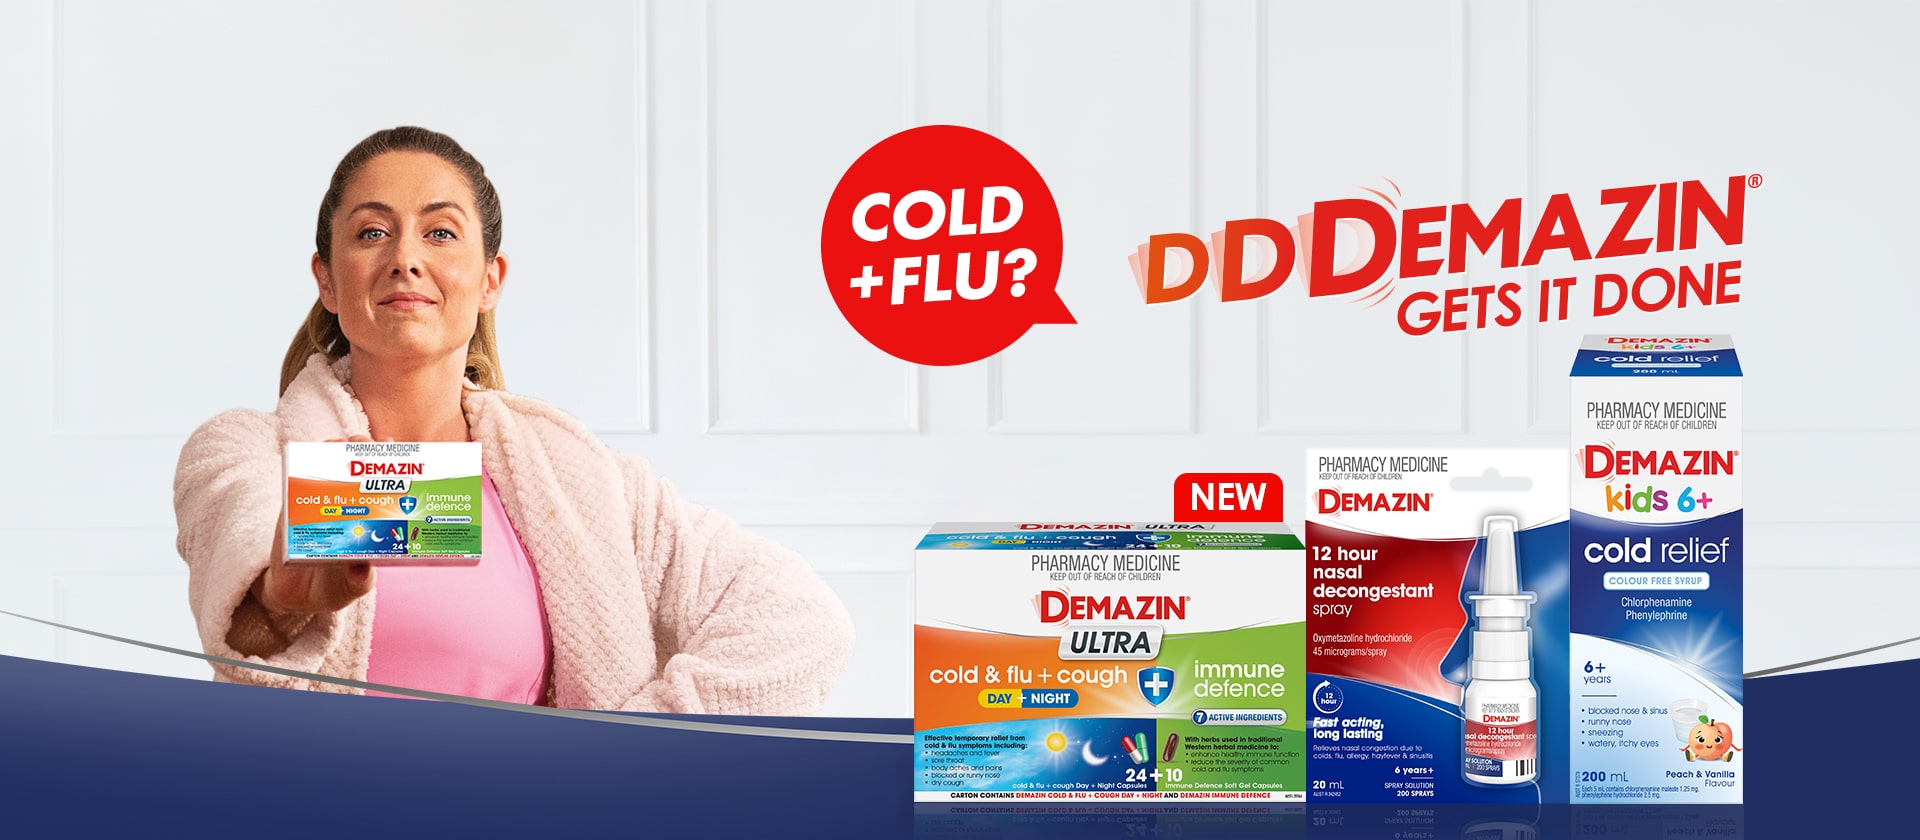 Demazin Gets It Done - Cold + Flu ? - Allergy + Hayfever?